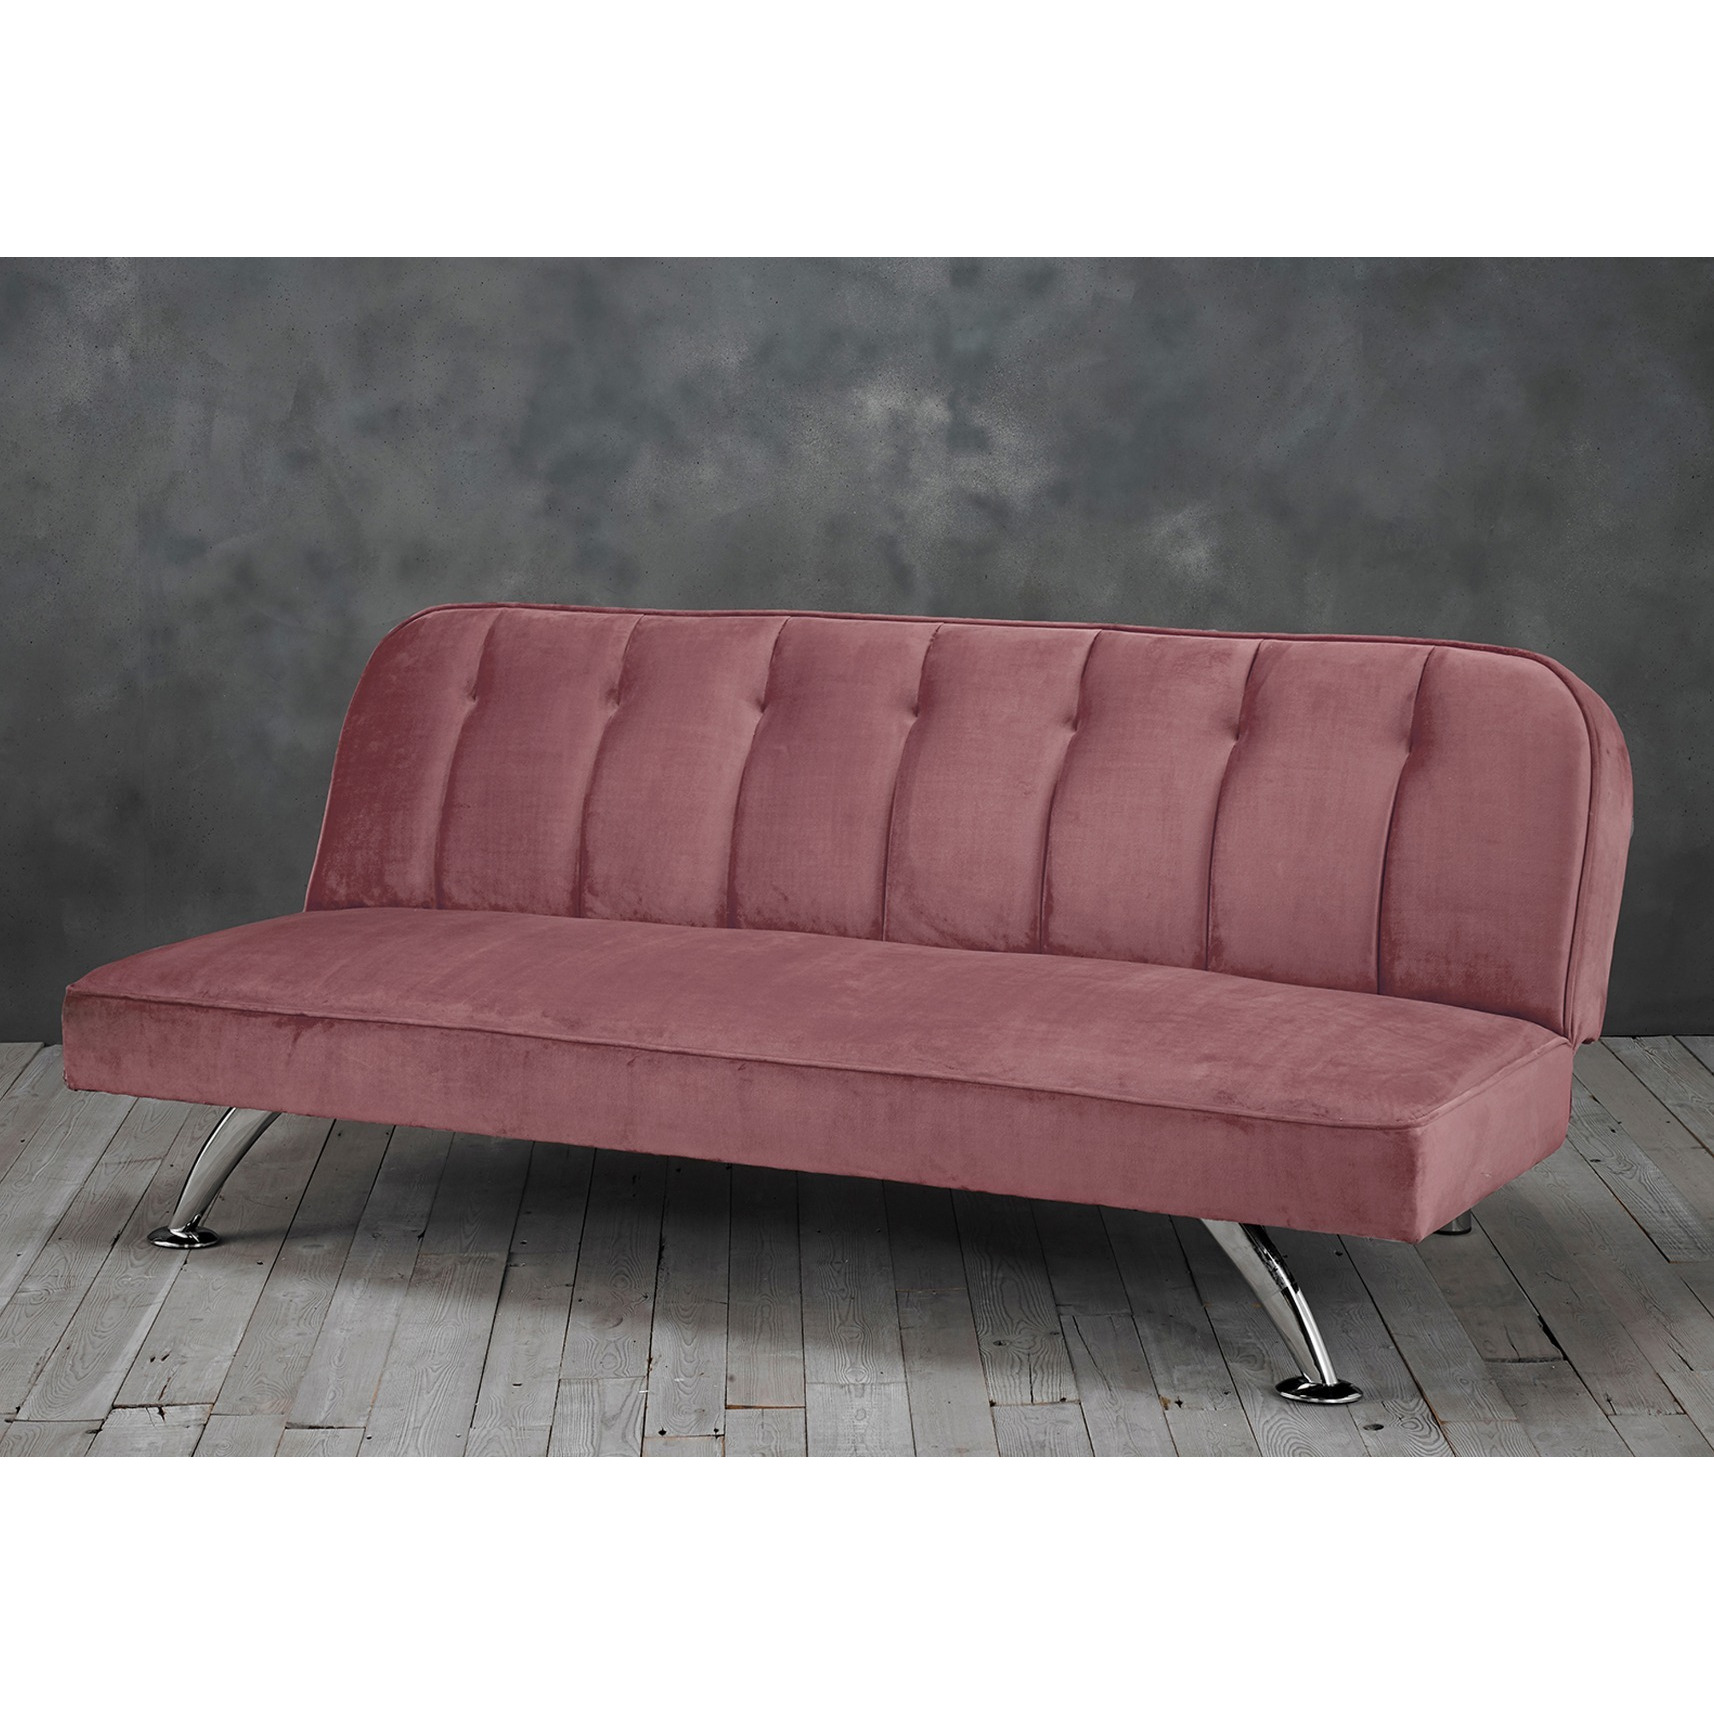 LPD Brighton Pink Fabric Sofa Bed - image 1